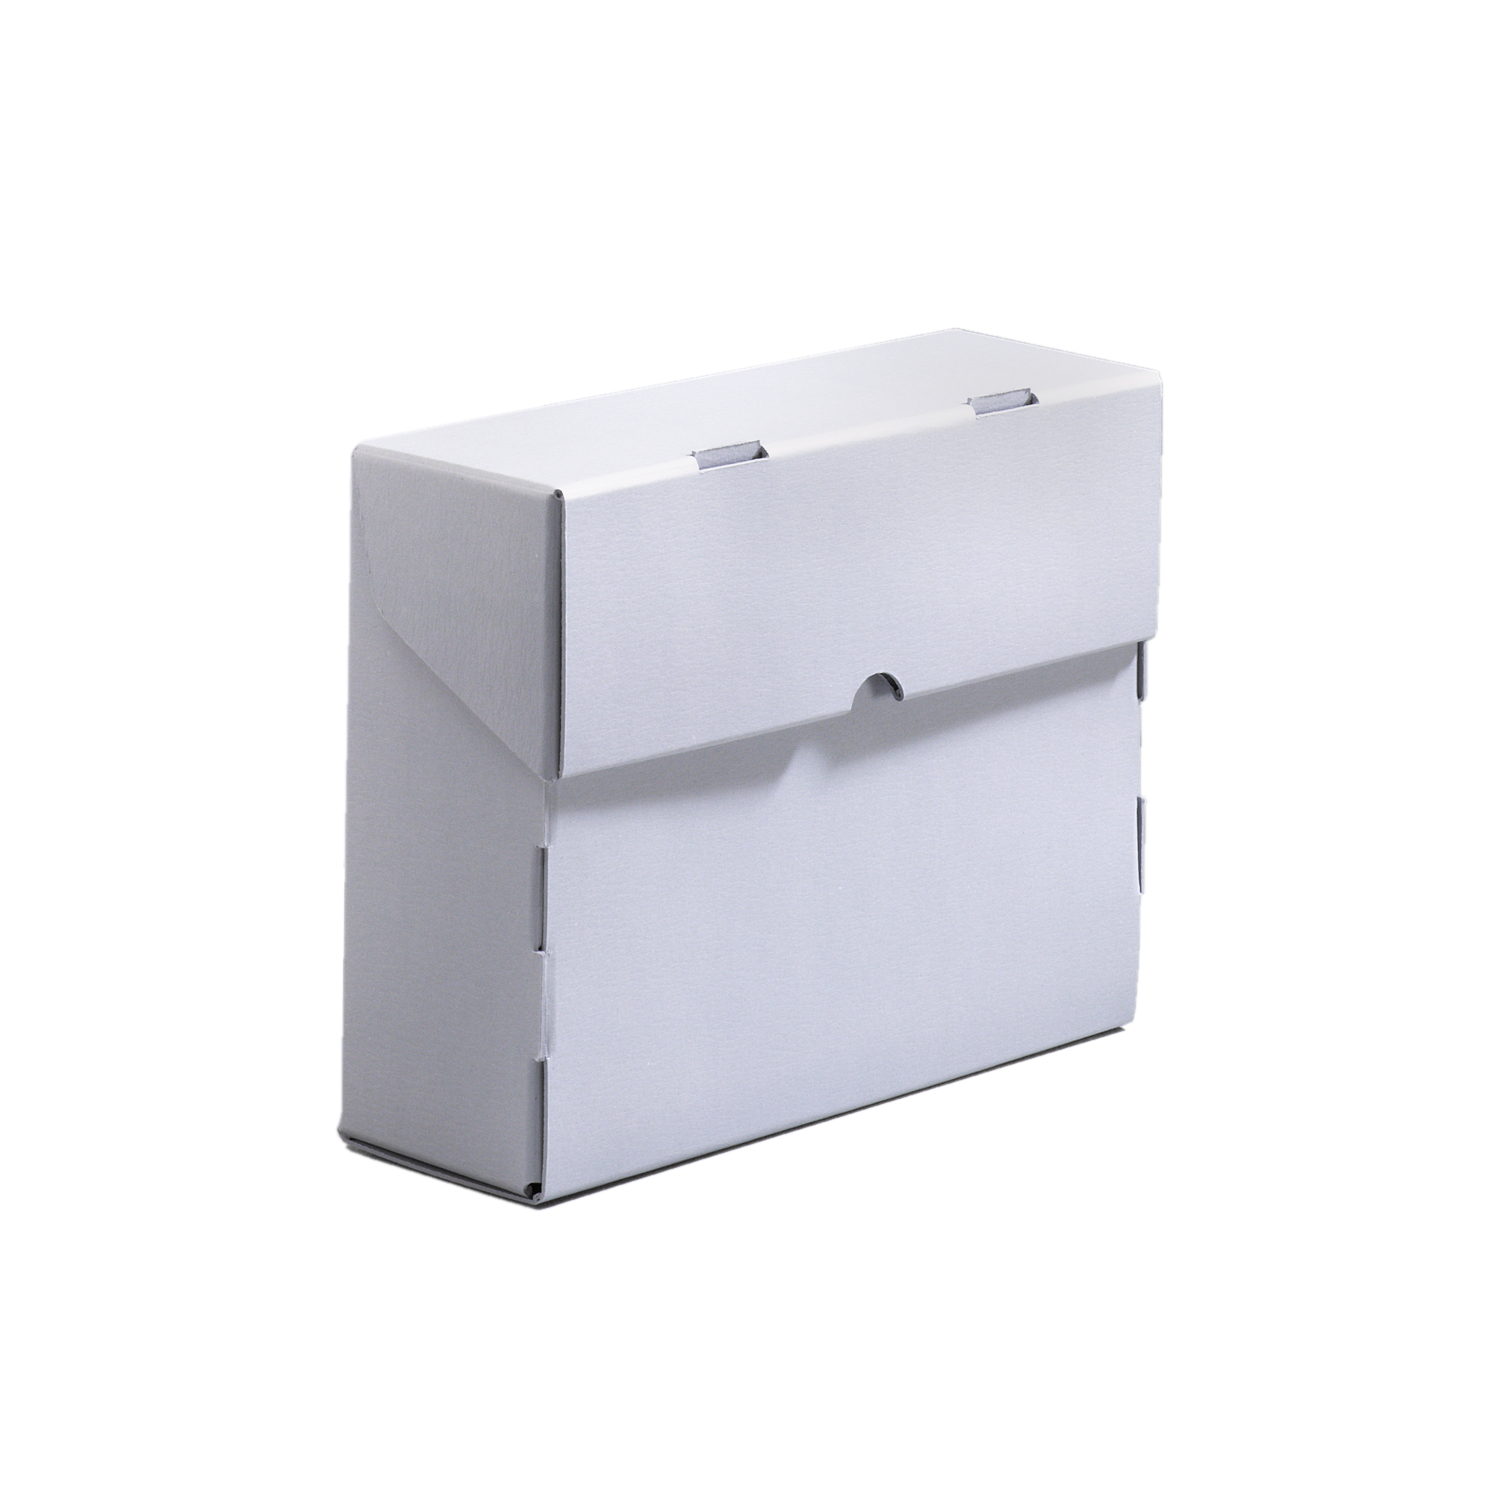 Storage box "Scala" - DIN A5 XL Premium